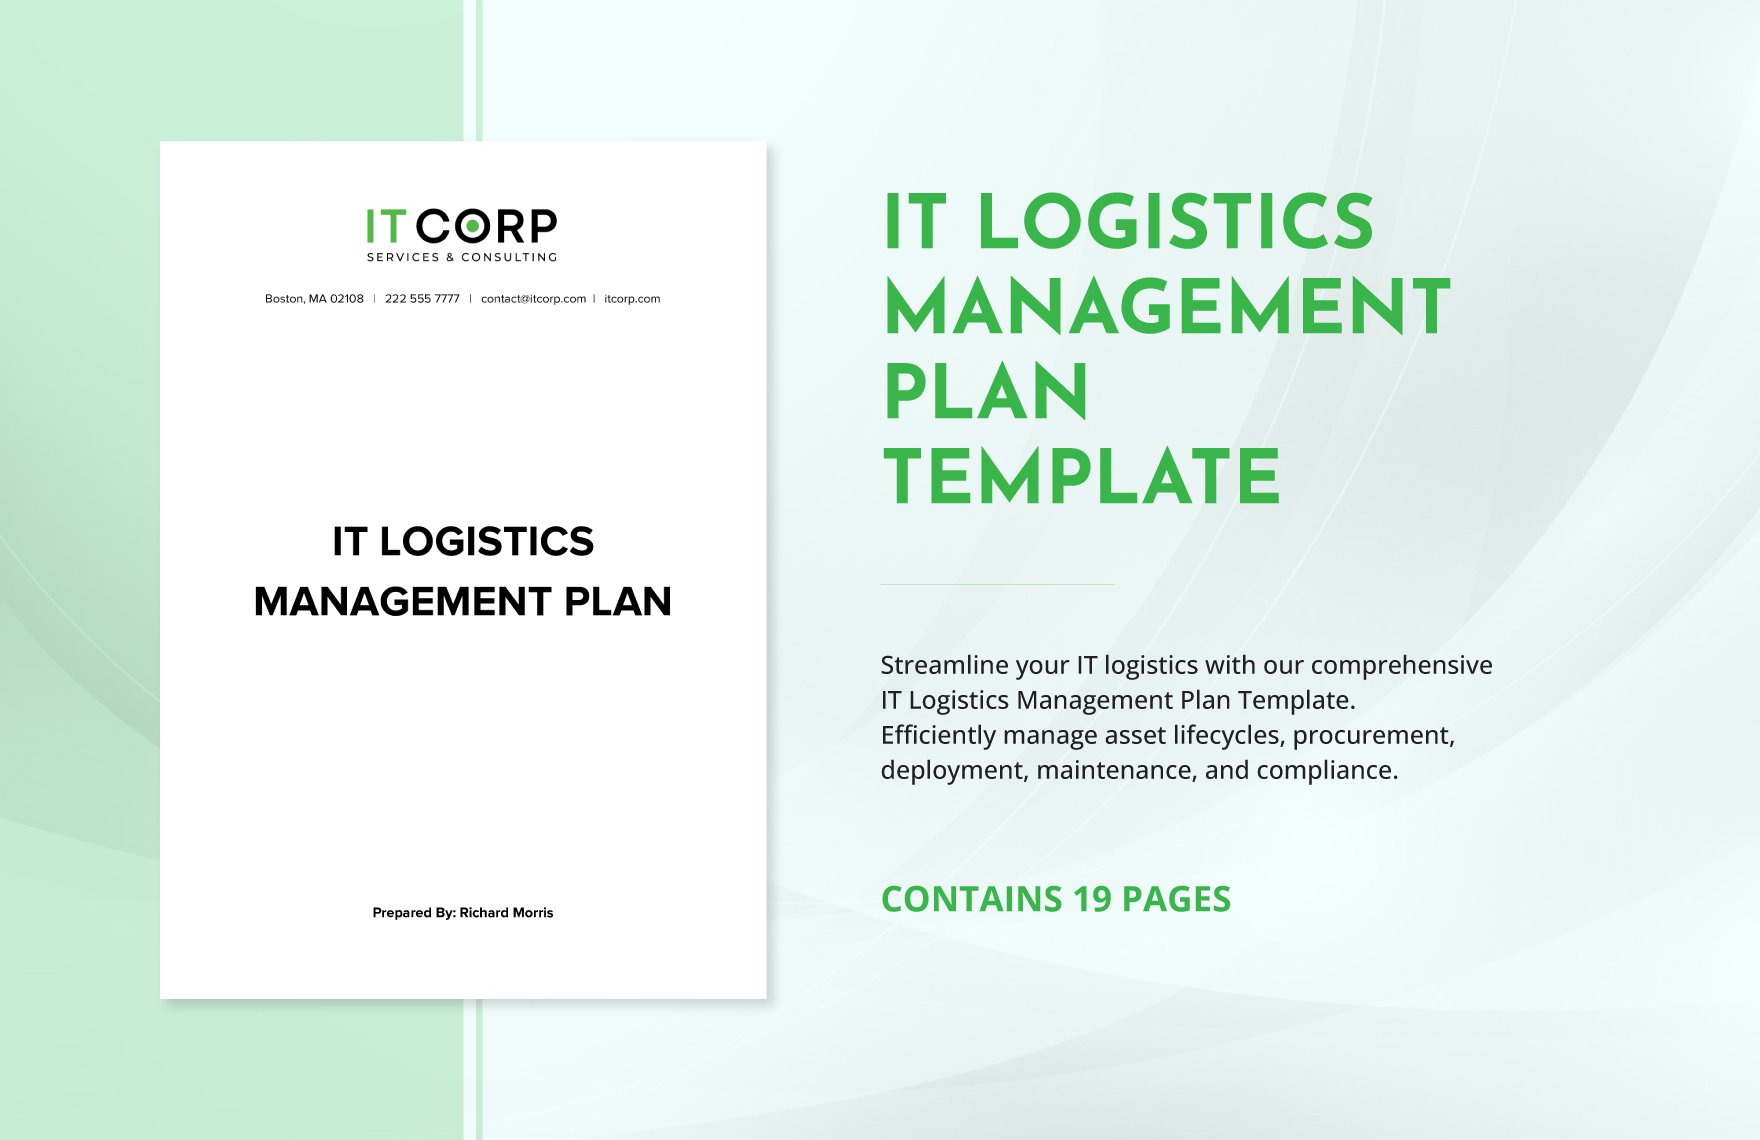 IT Logistics Management Plan Template